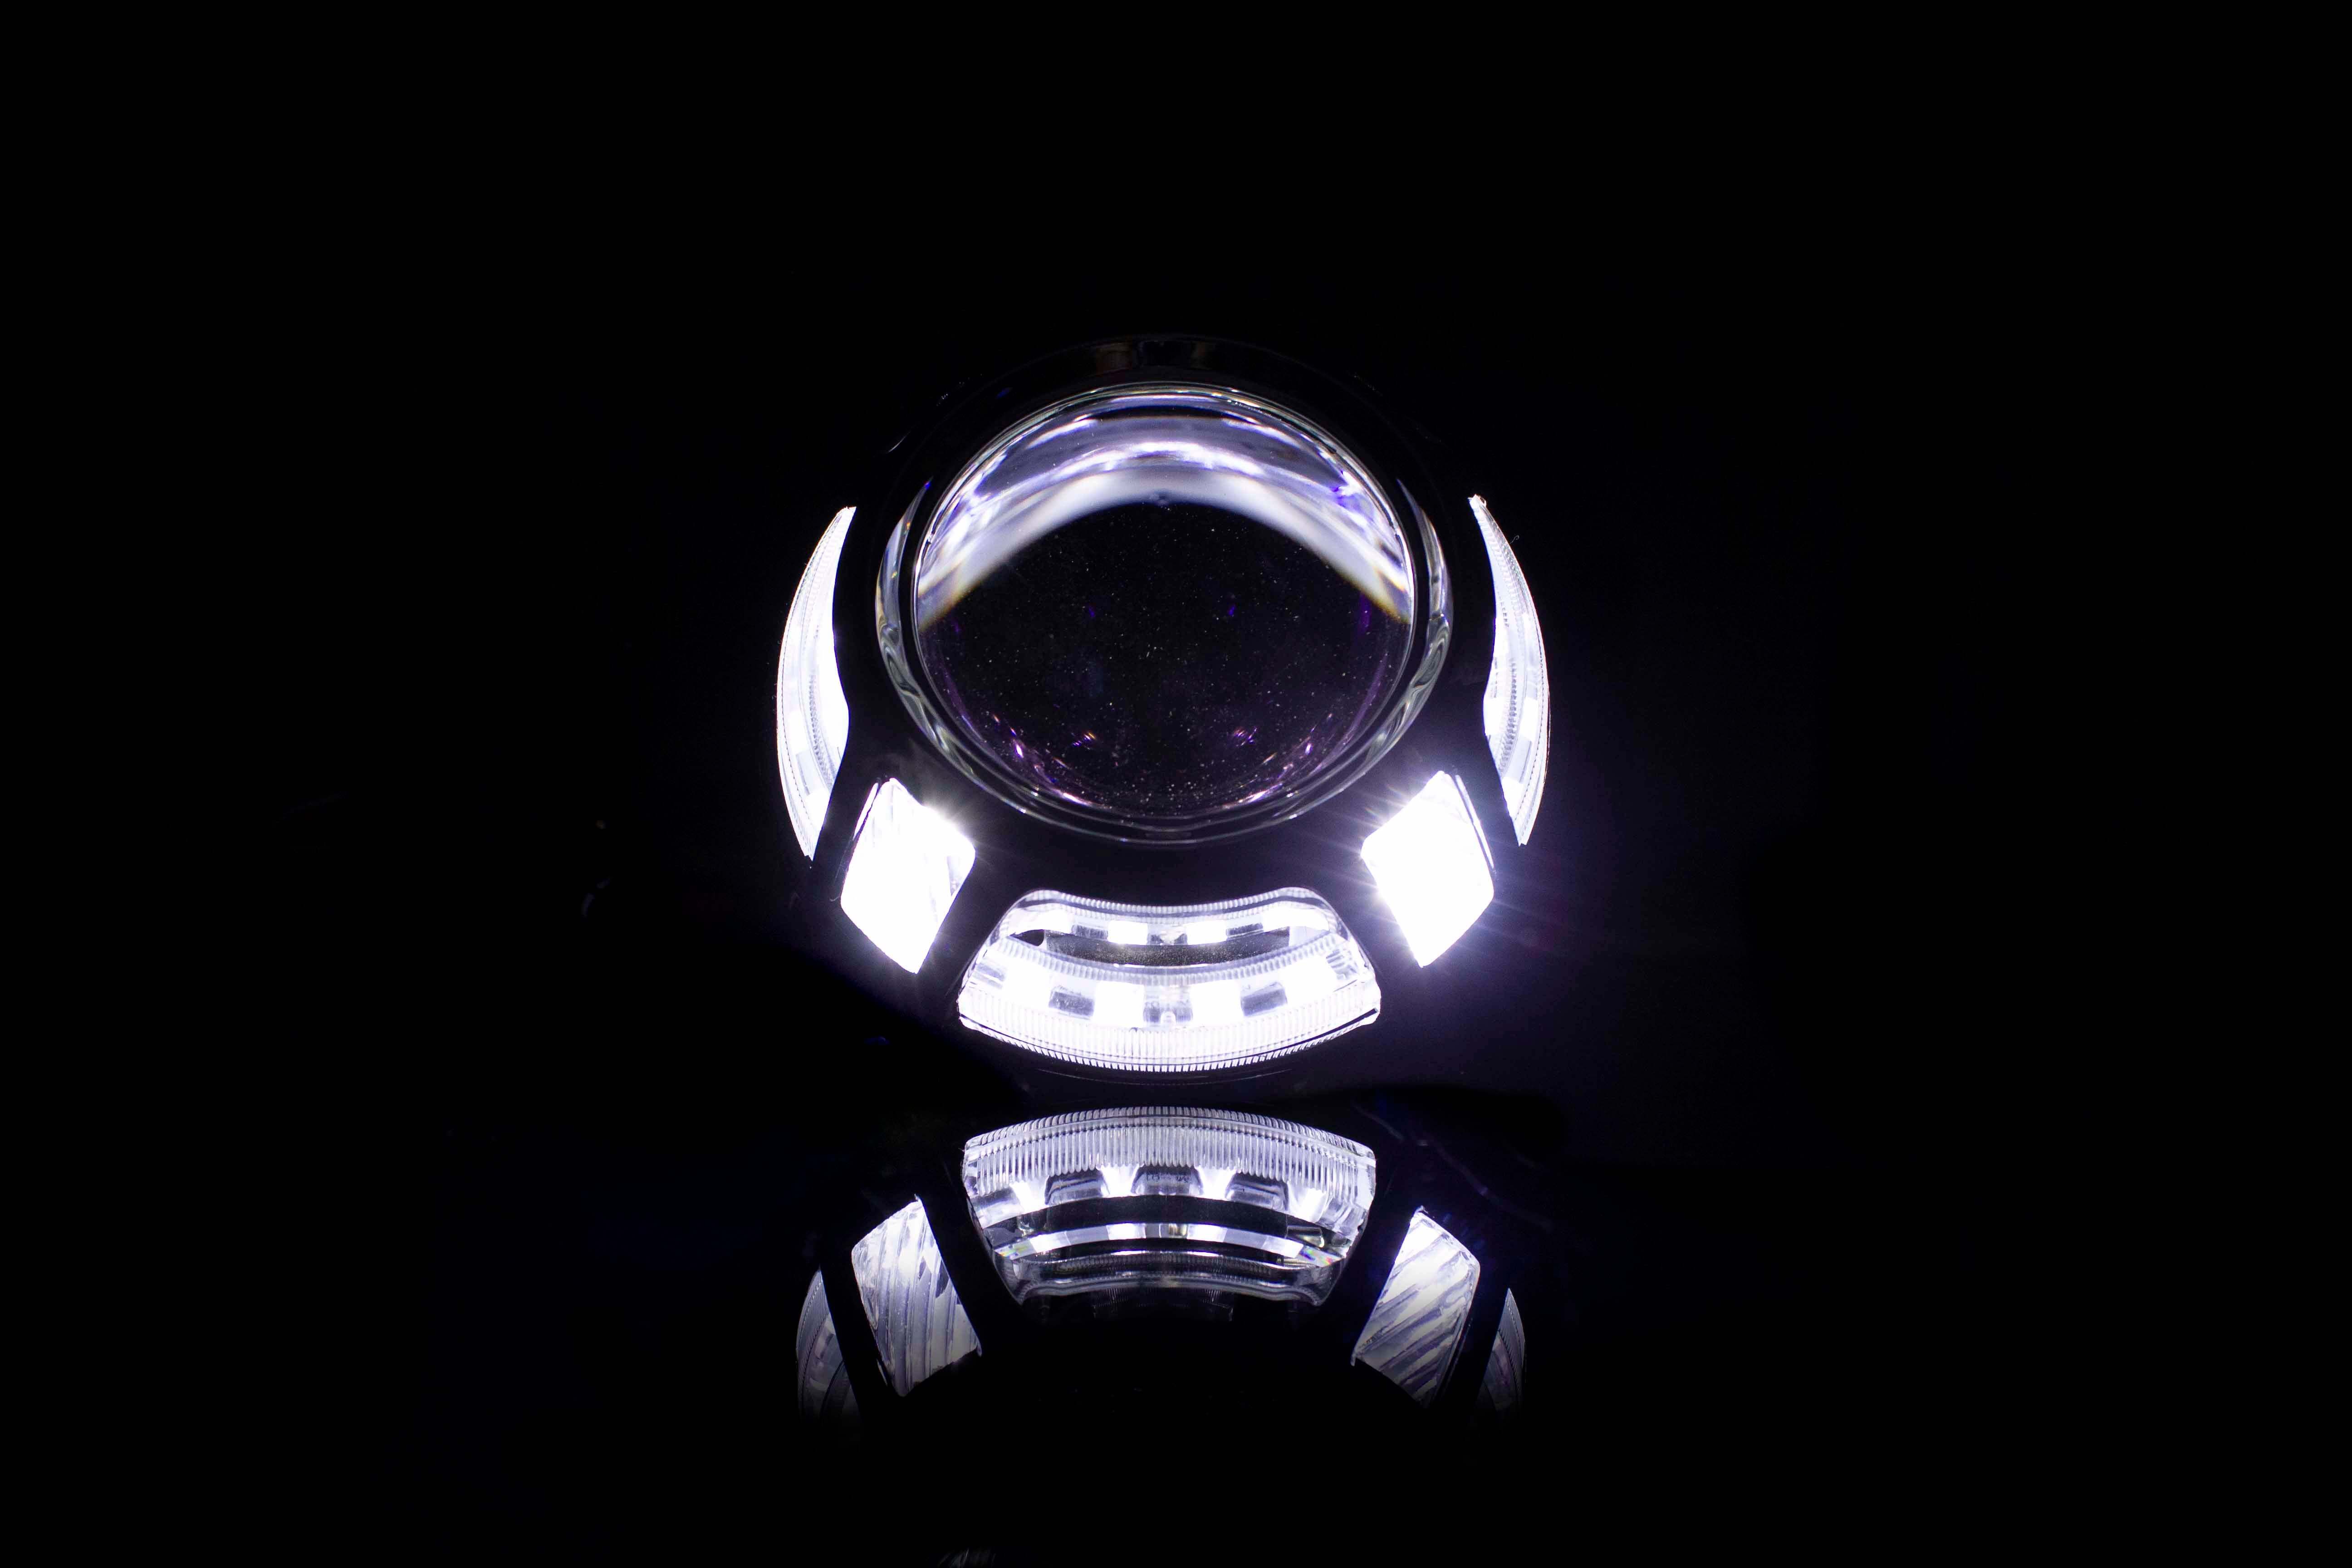 Panamera LED shroud for your HID xenon or LED retrofit